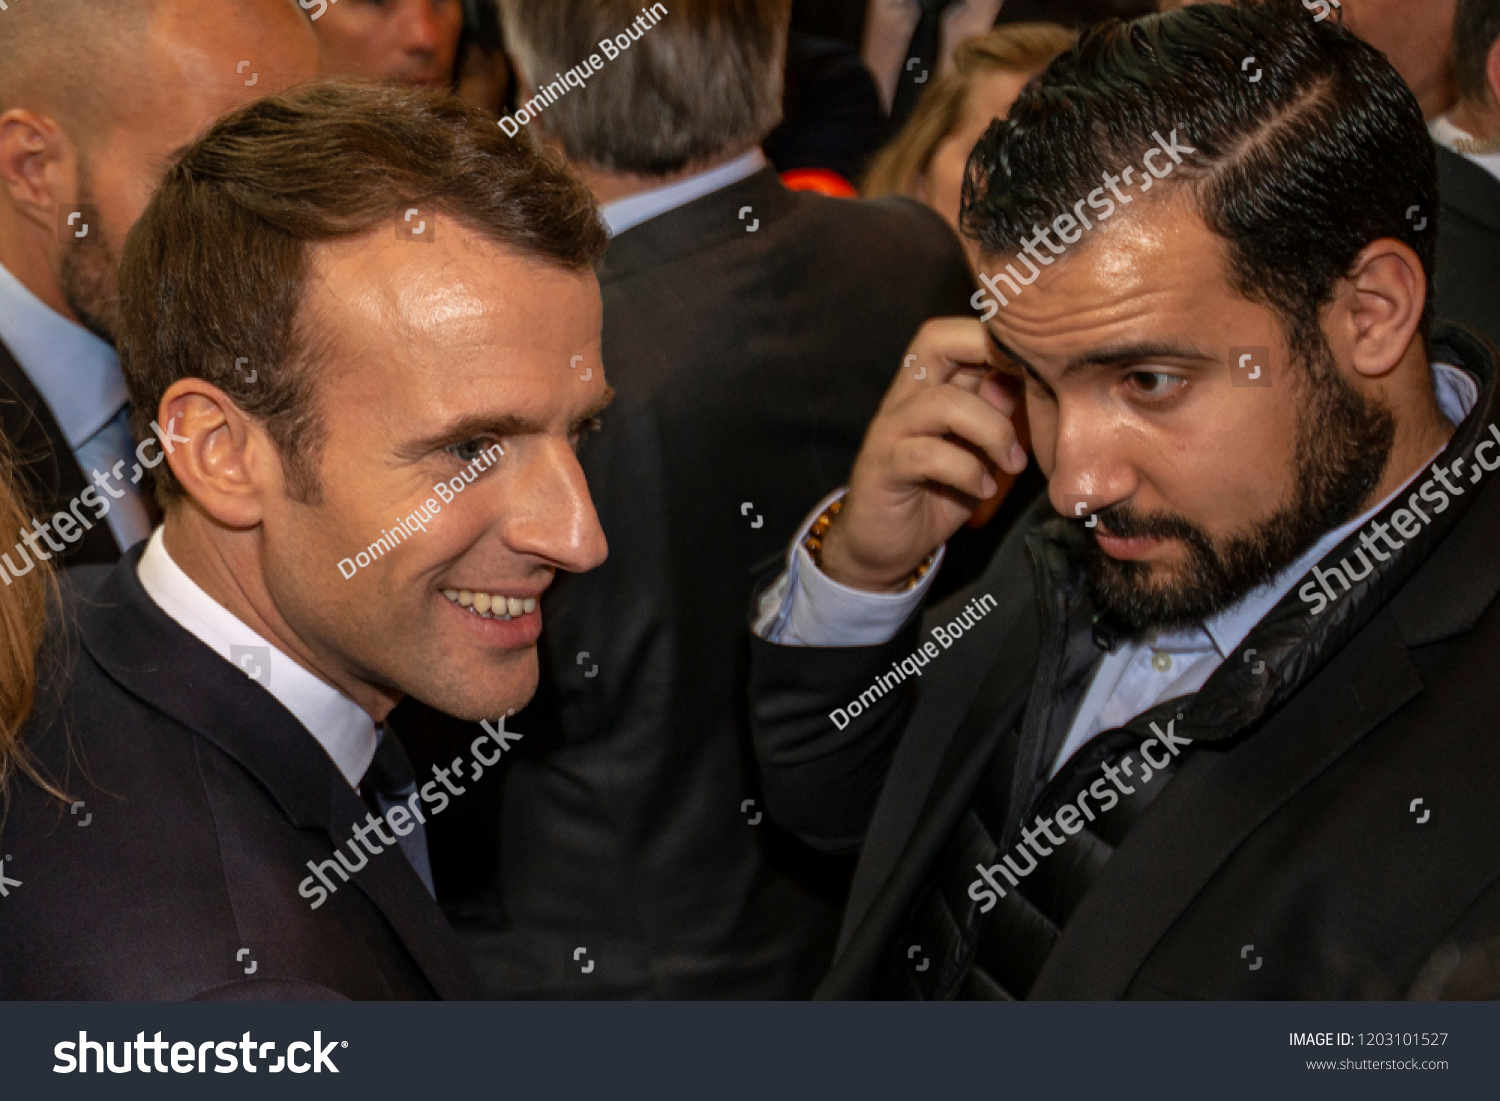 Emmanuel Macron L Alexandre Benalla R Stock Photo Edit Now 1203101527